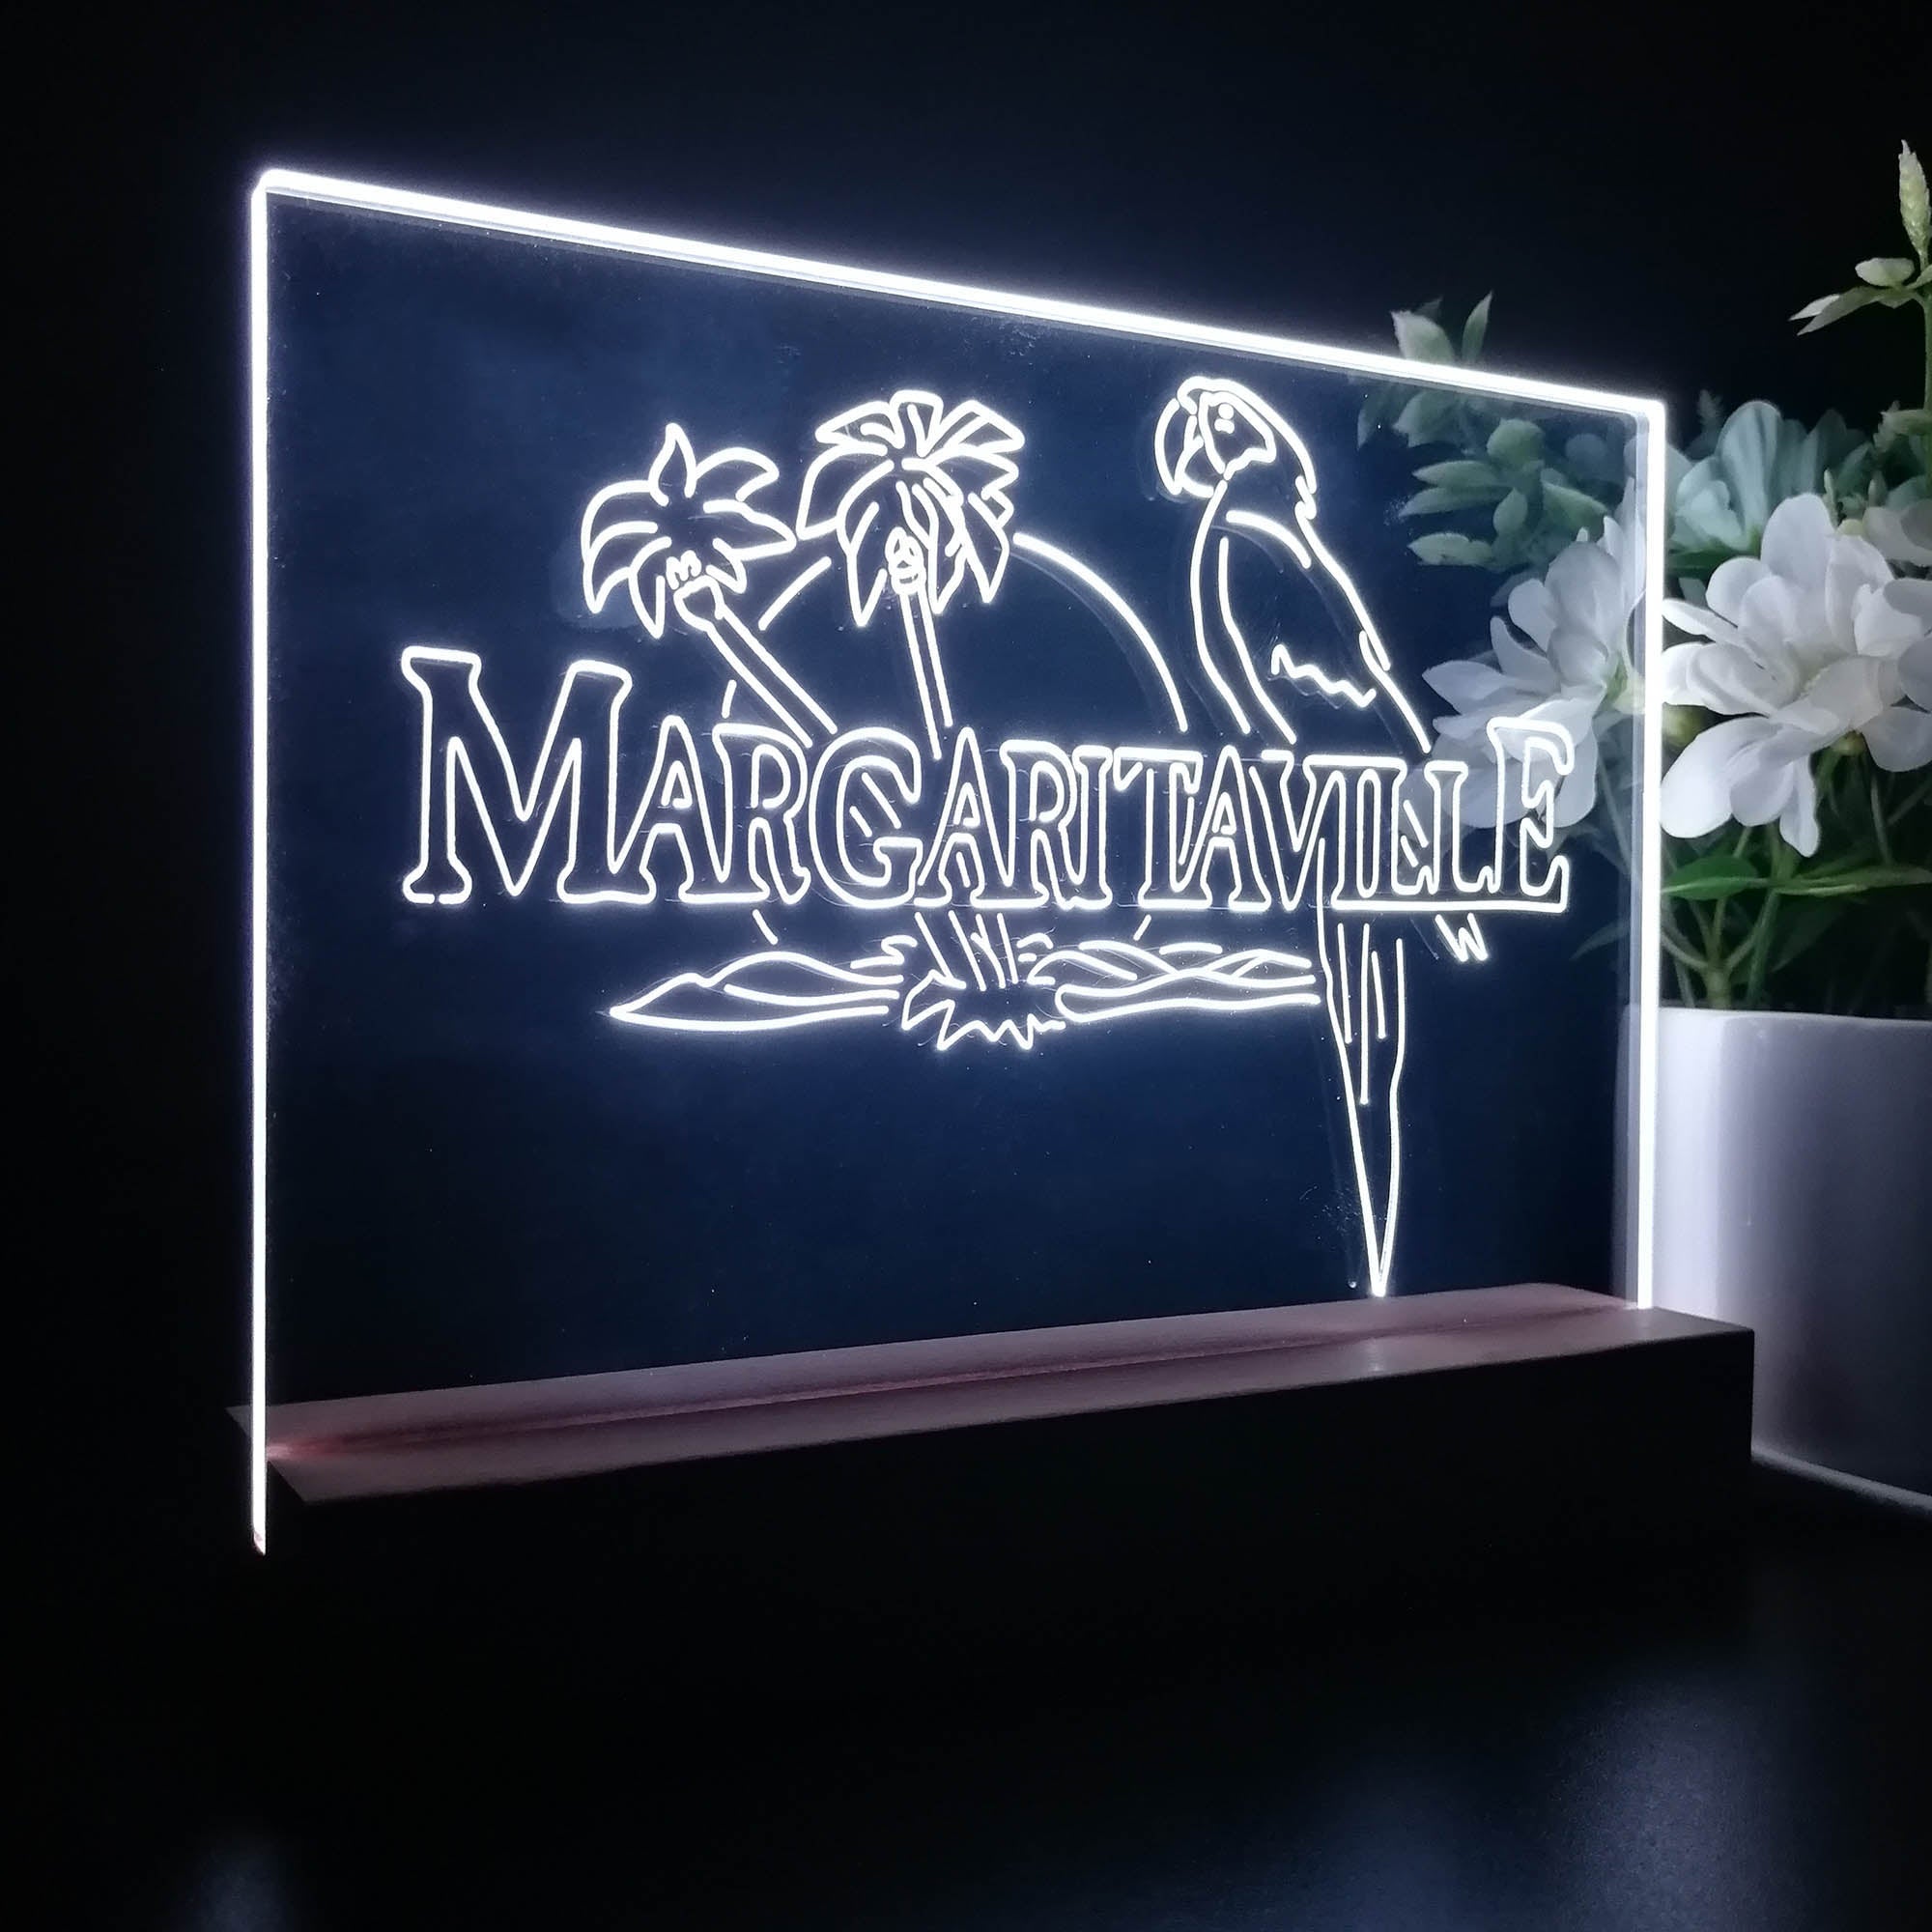 Jimmy Buffett's Margaritaville Parrot Neon Sign Pub Bar Decor Lamp